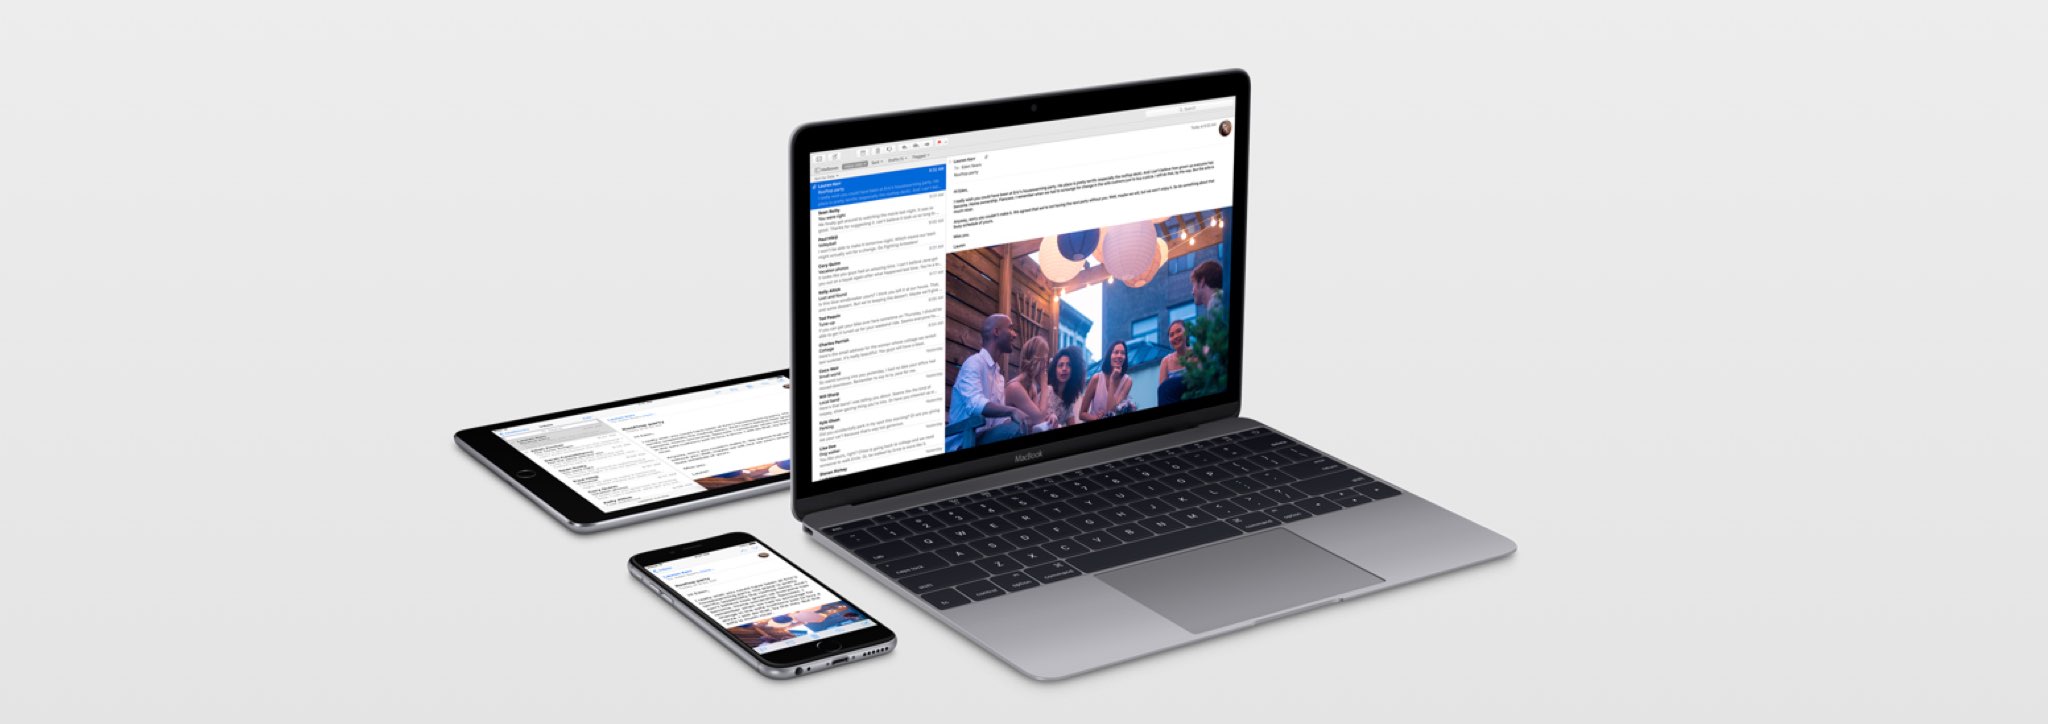 Apple Mail on iPhone, iPad and Mac